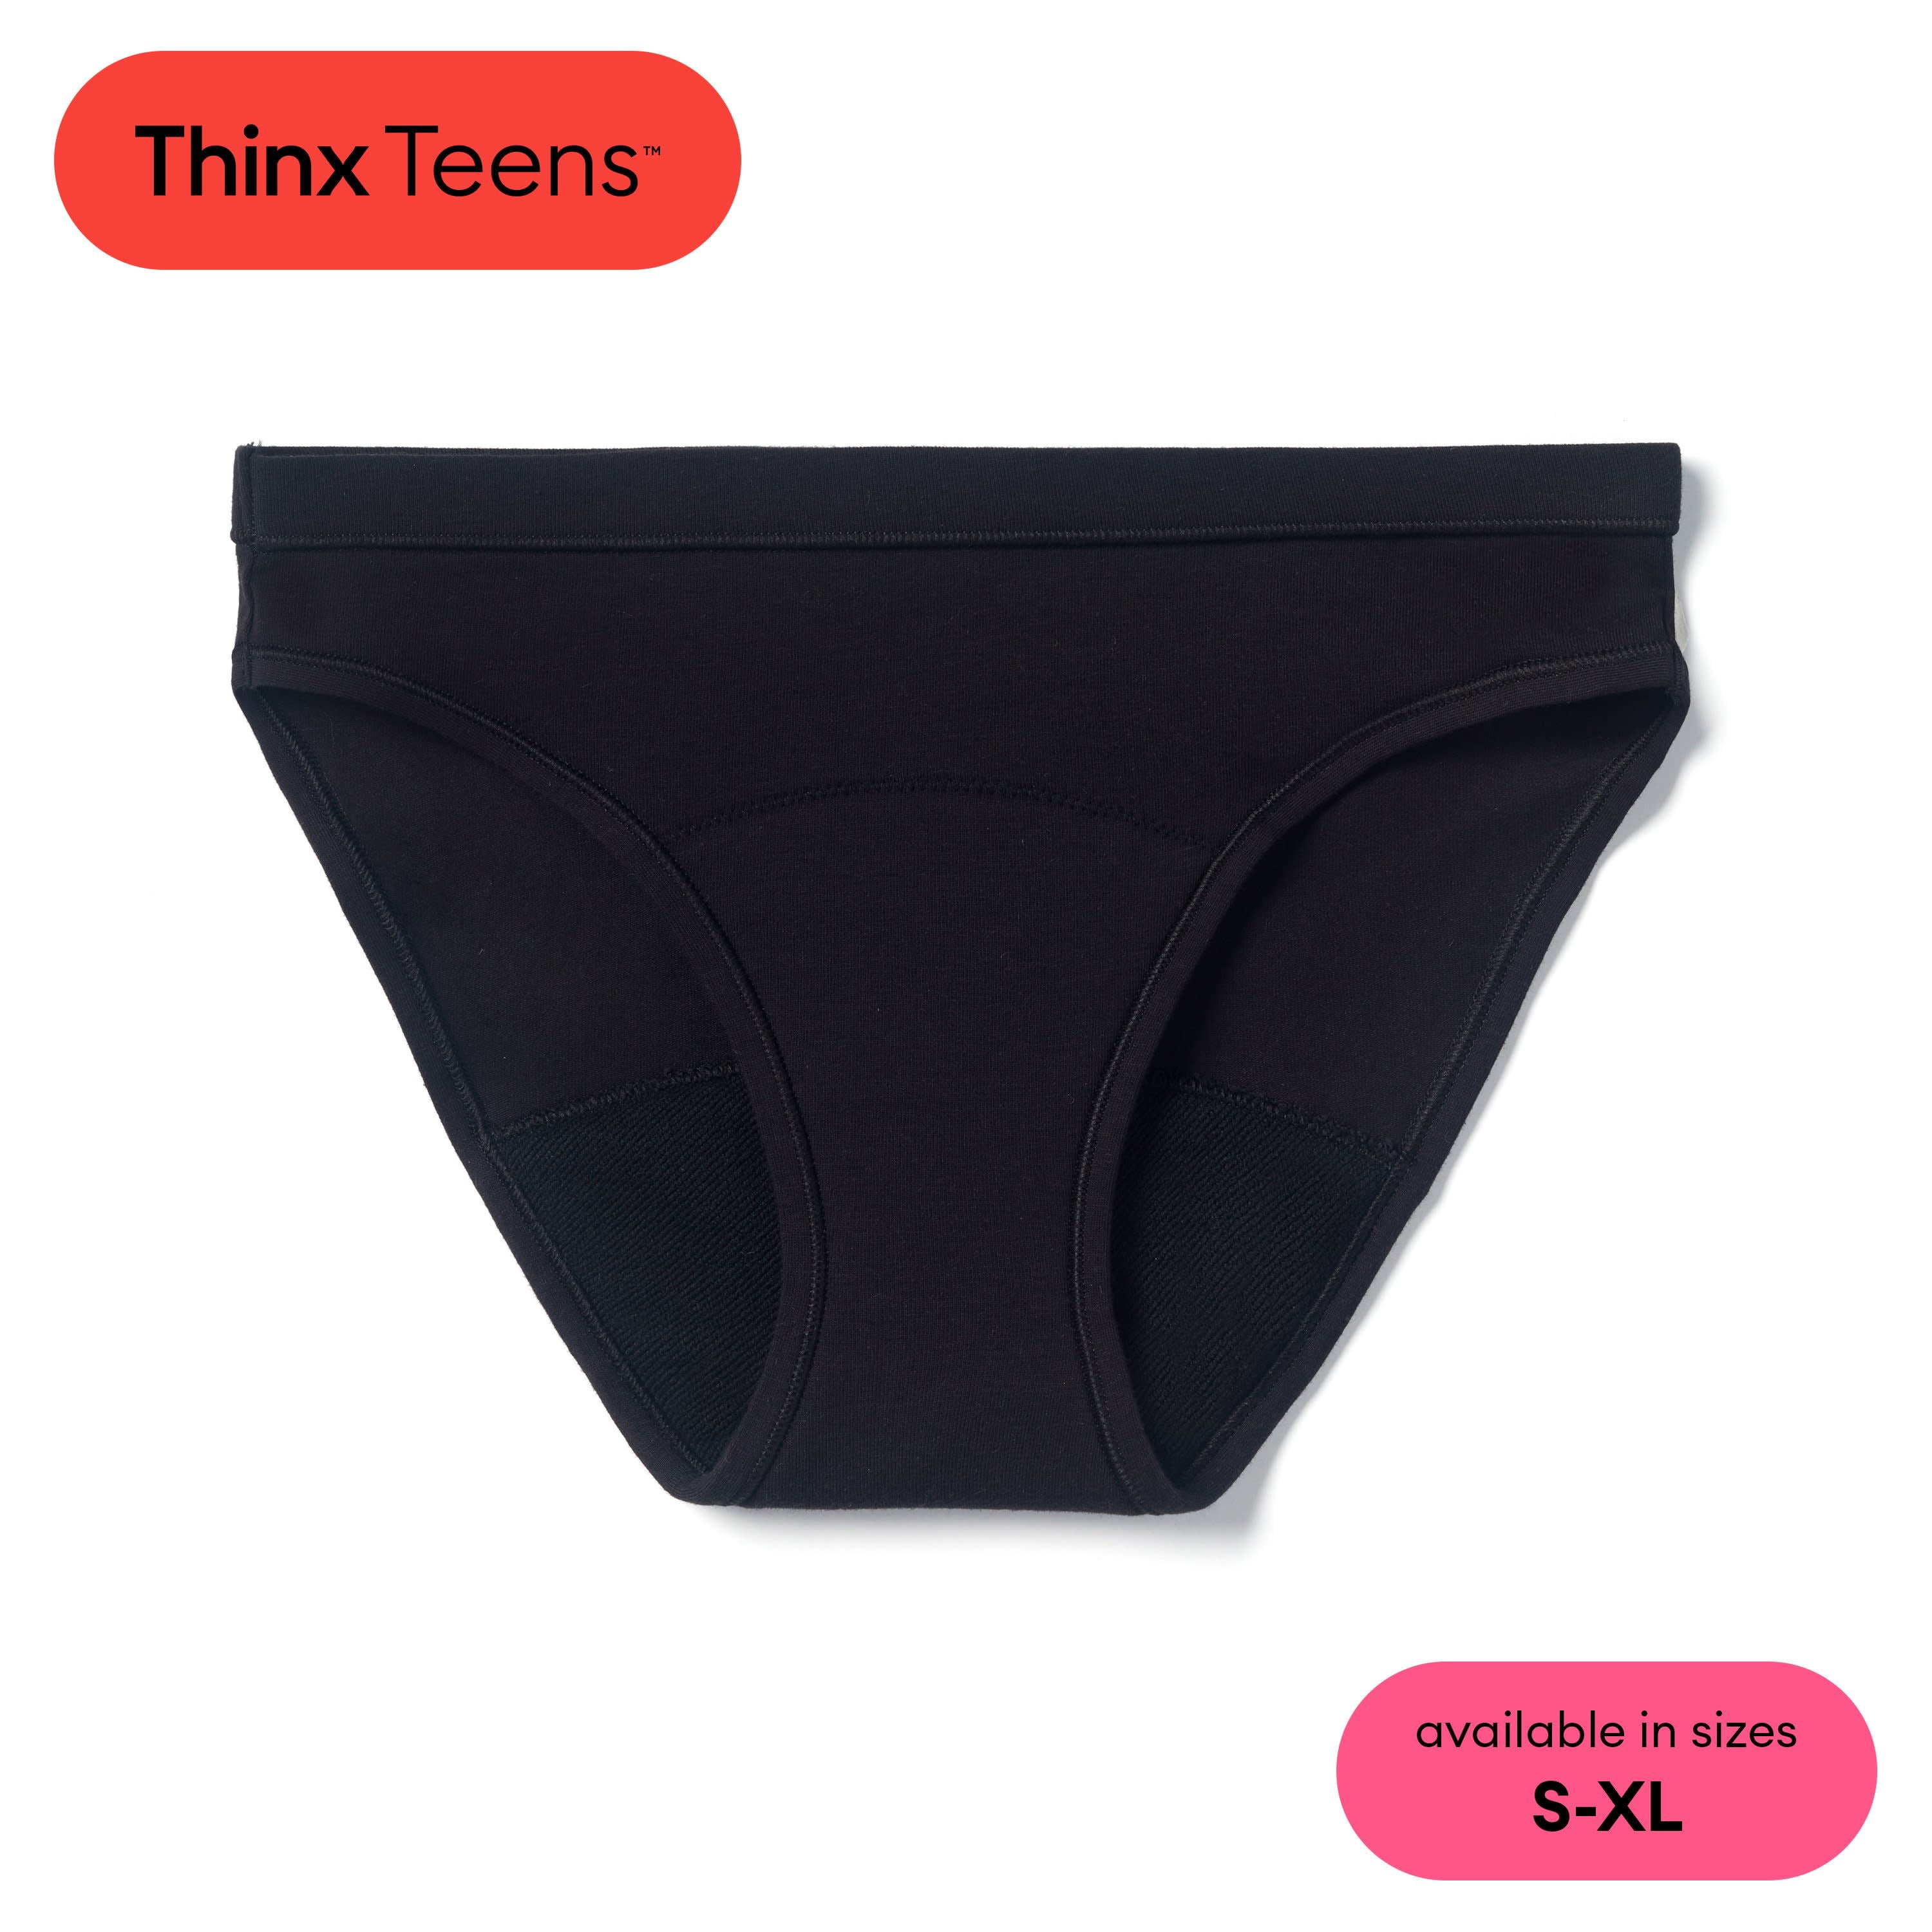 Thinx Teens Super Absorbency Cotton Bikini Period Underwear, Small, Black 